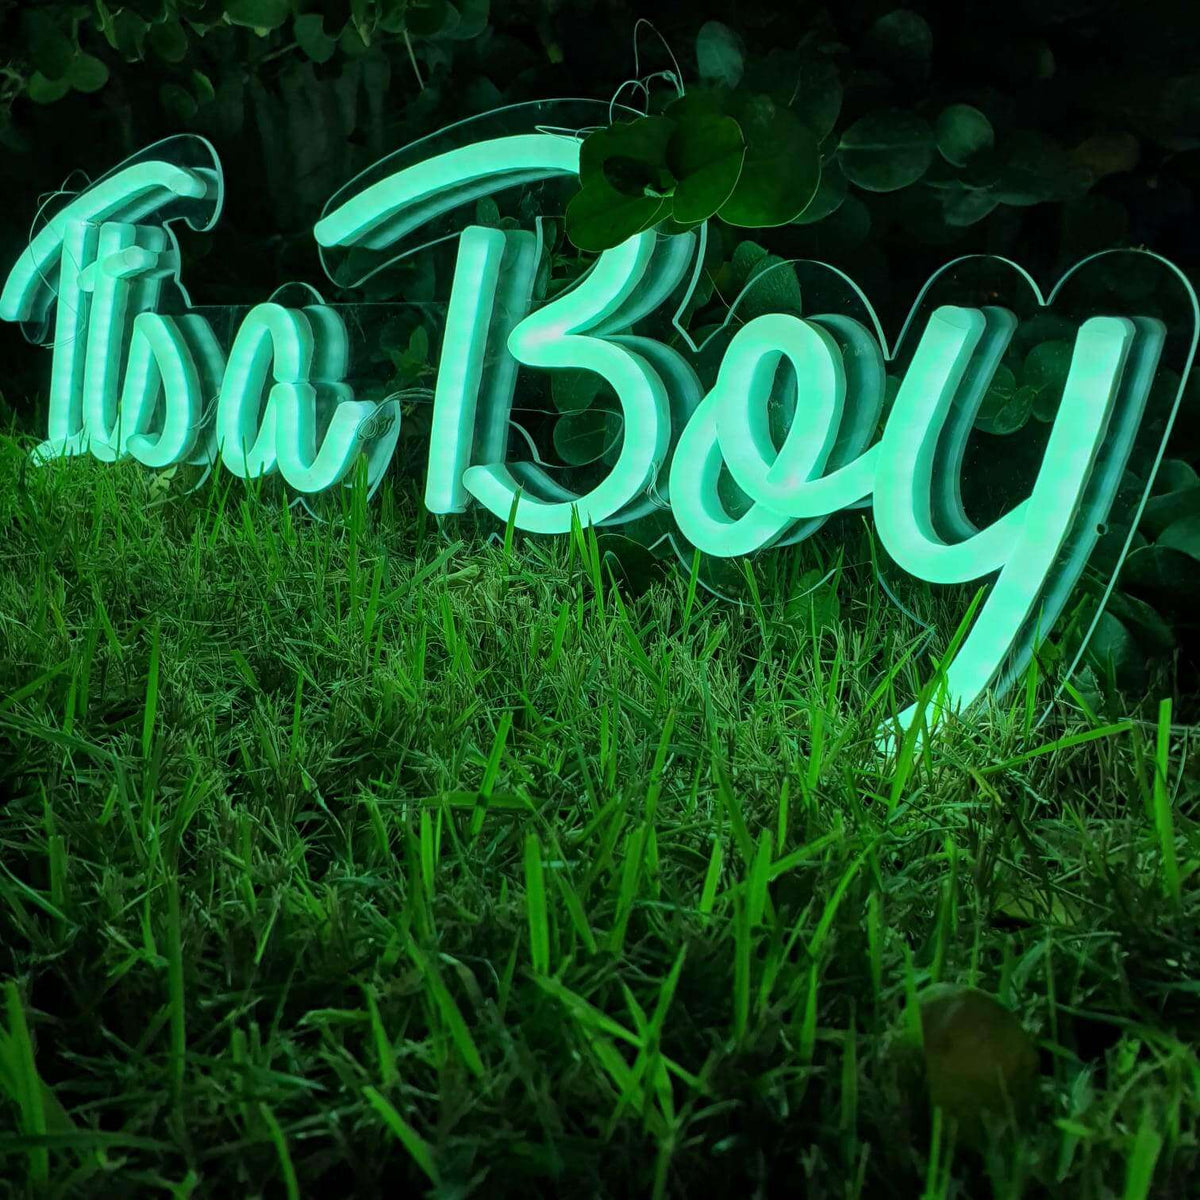 It's a Boy 👶 - Good Vibes Neon